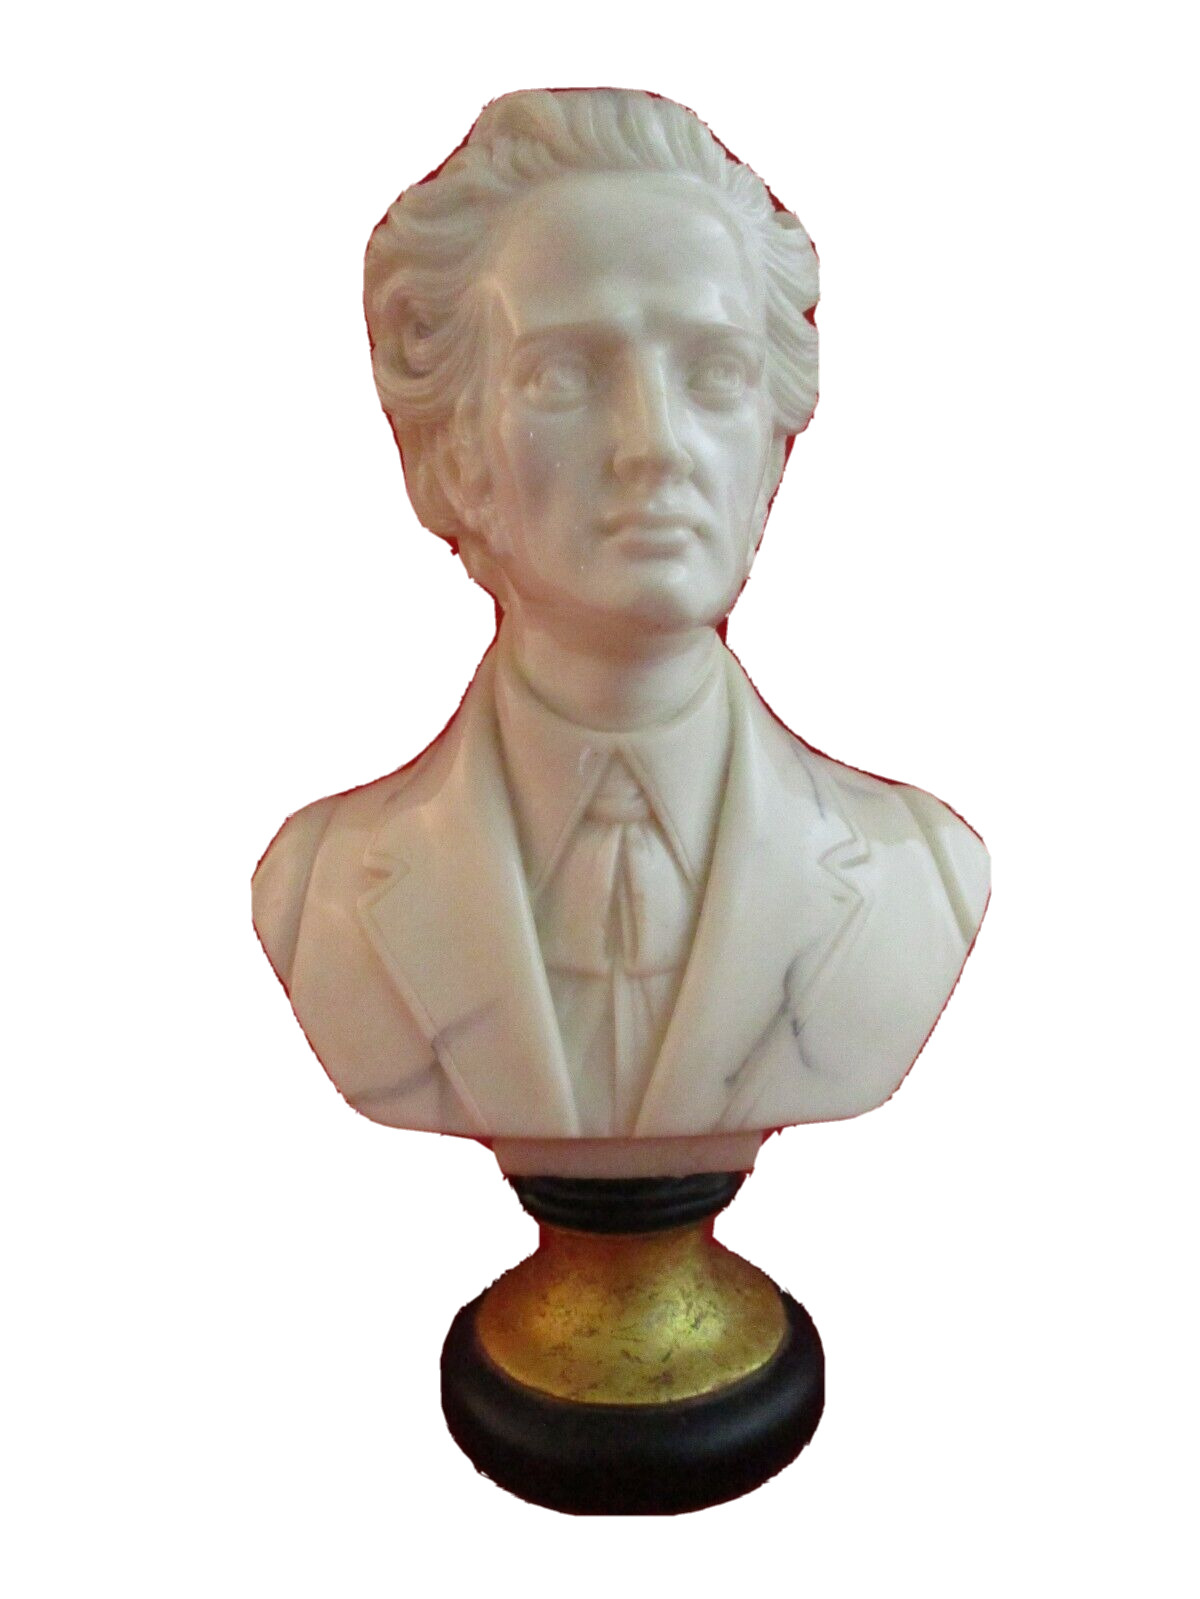 Vintage Fredrick Chopin Bust Statue Sculpture Marble Look (8)